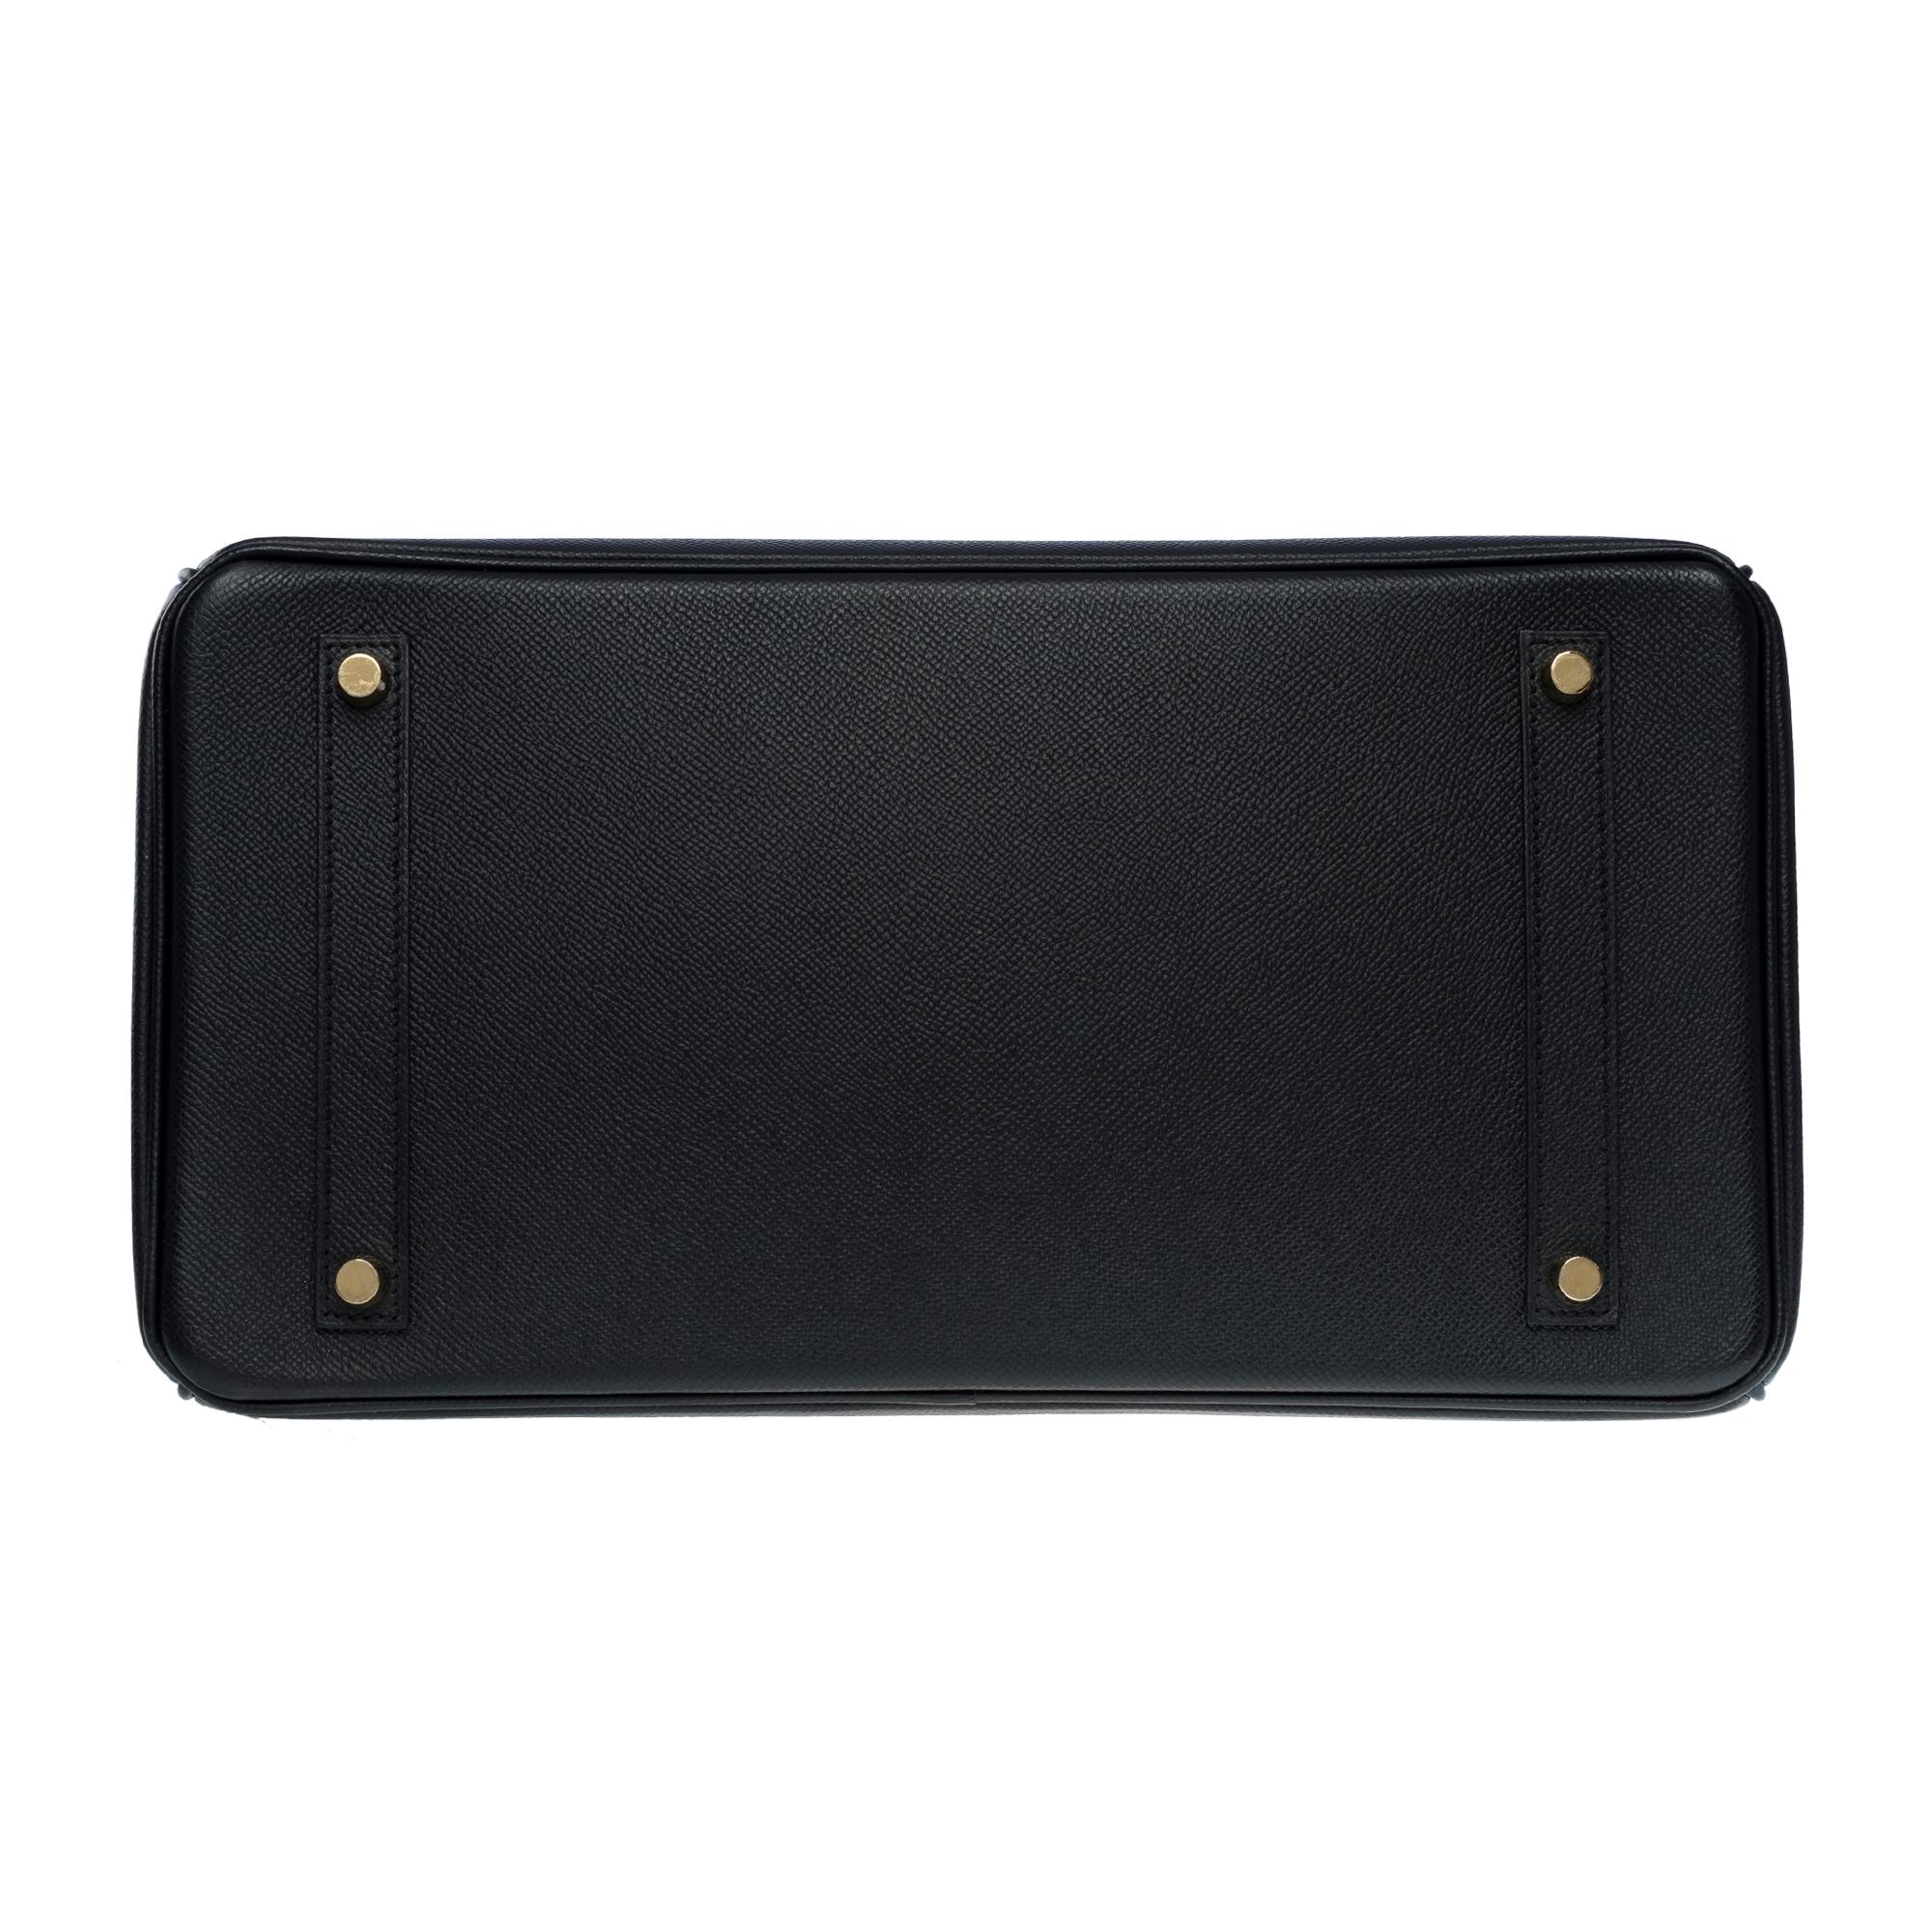 Rare Hermès Birkin 35 HSS (Special Order) handbag in black epsom leather, BGHW 5